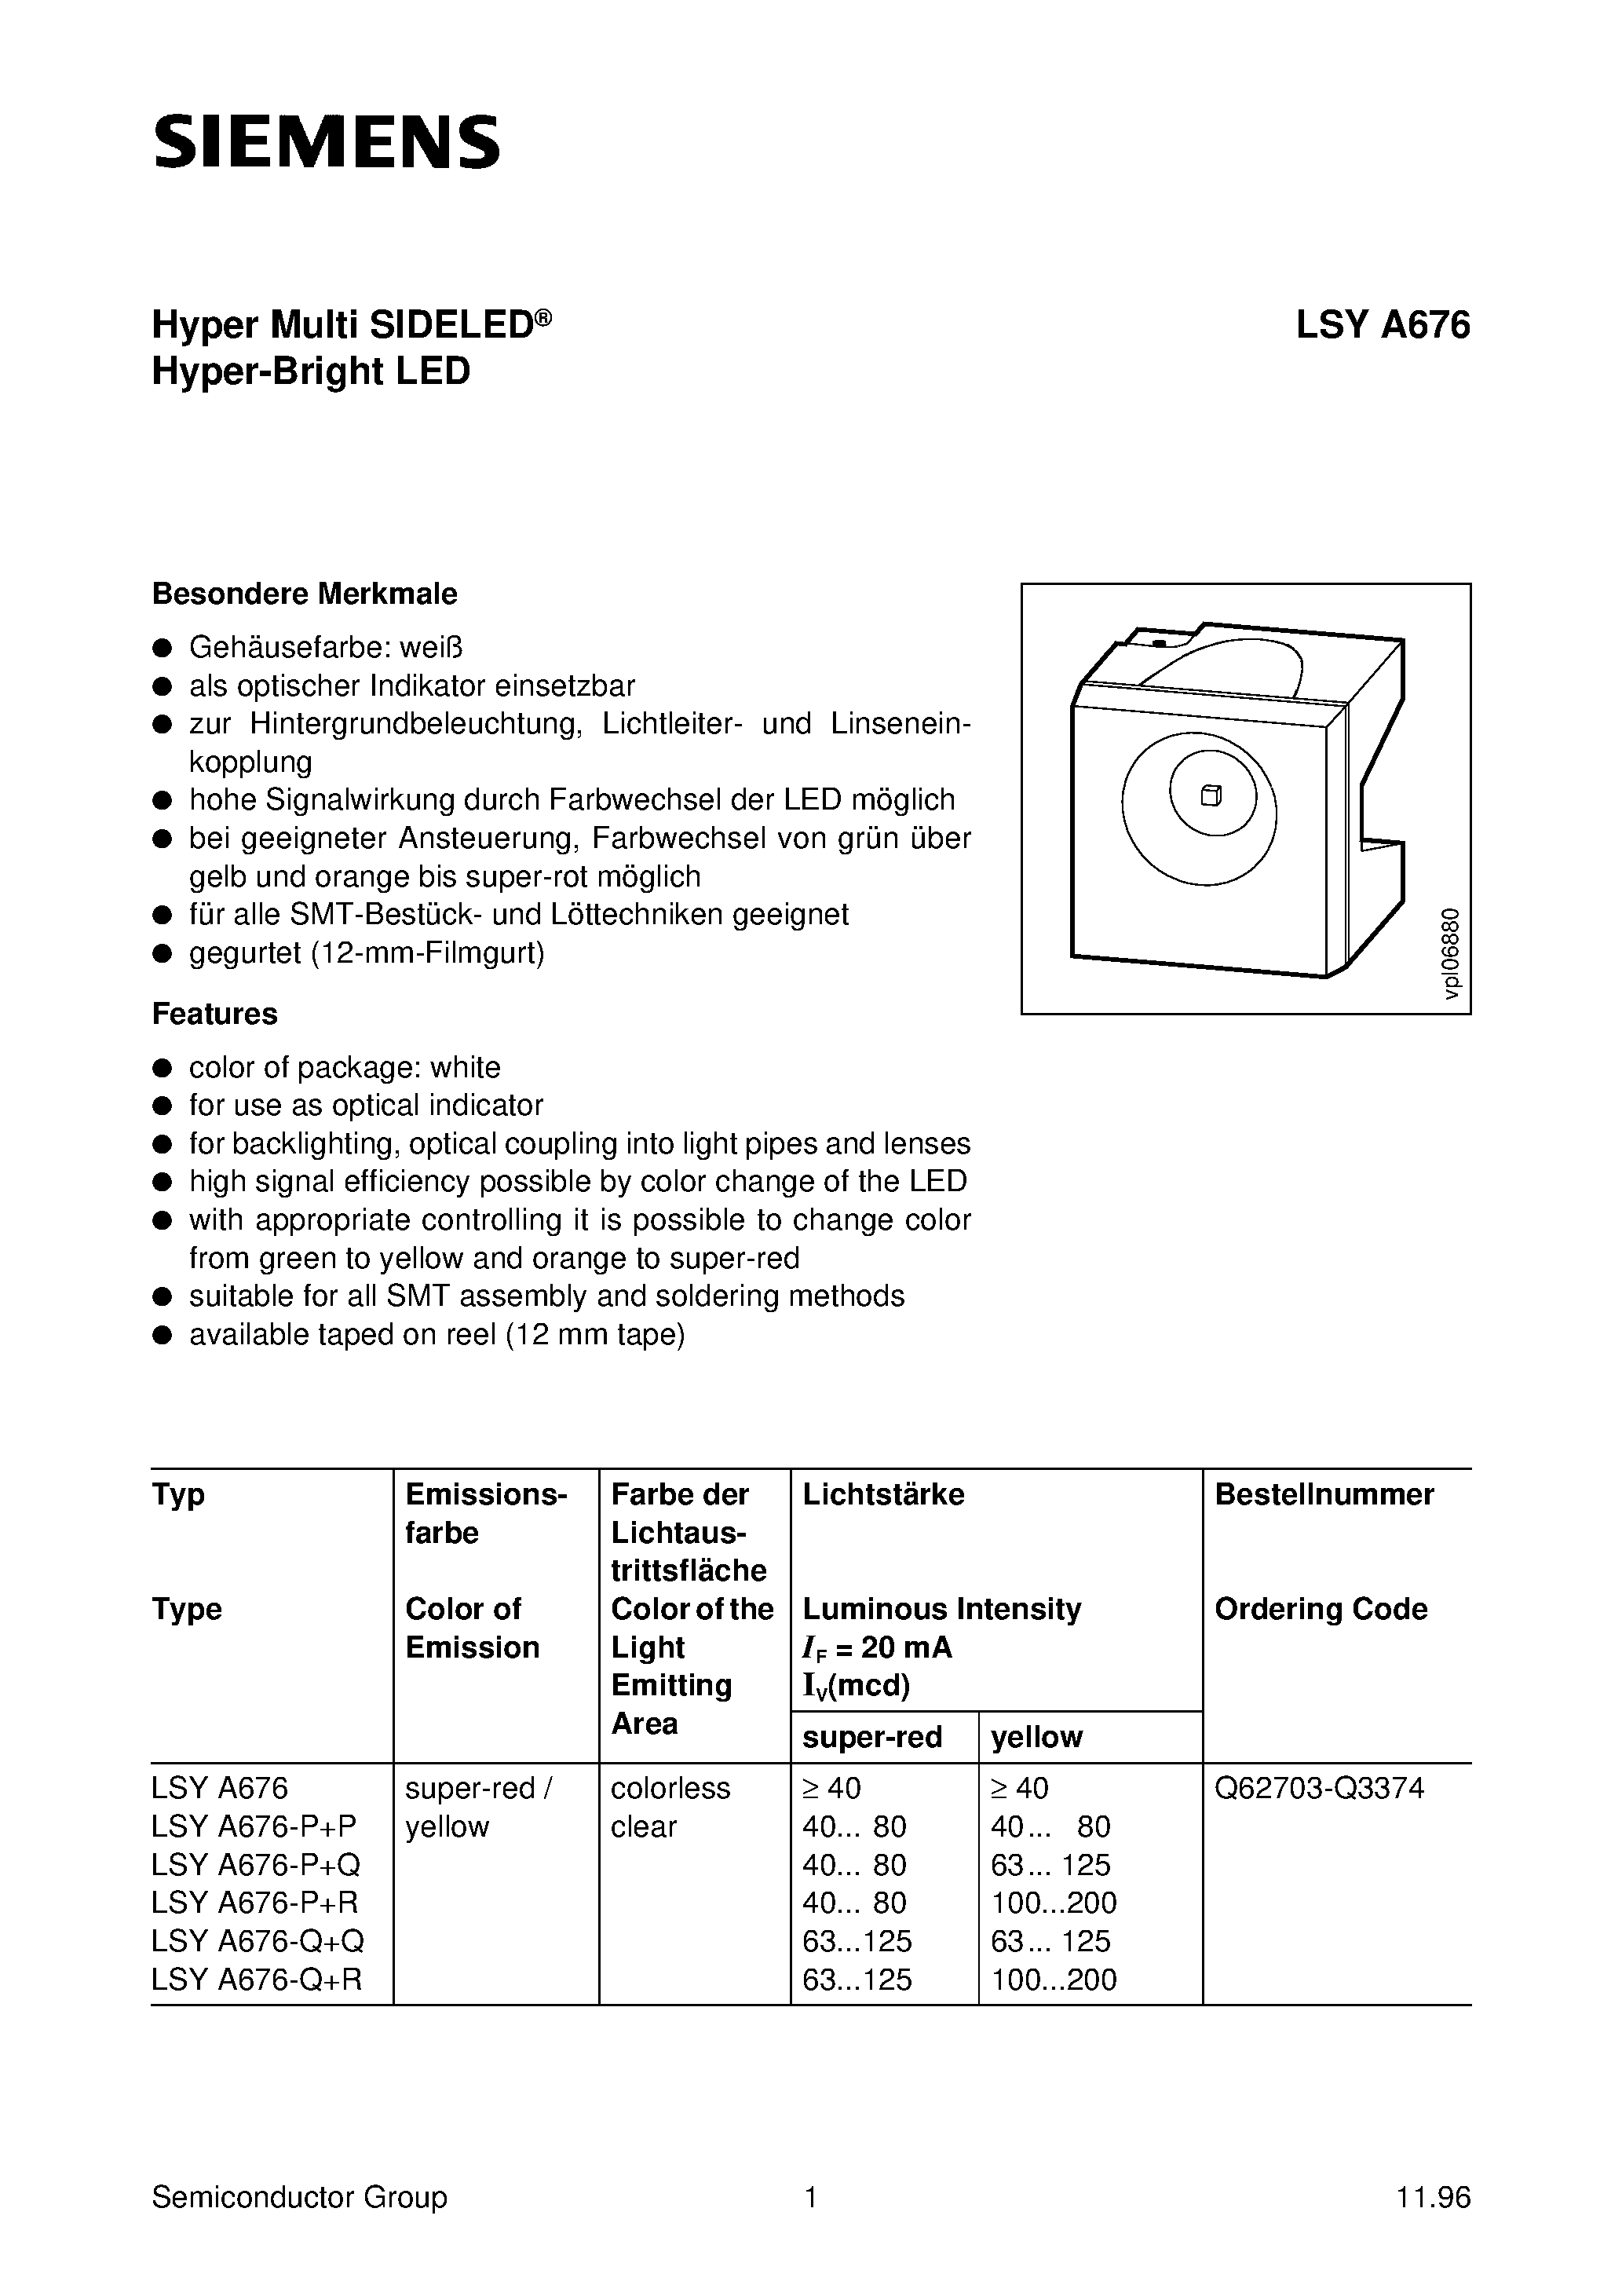 Даташит LSYA676-Q+R-Hyper Multi SIDELED Hyper-Bright LED страница 1